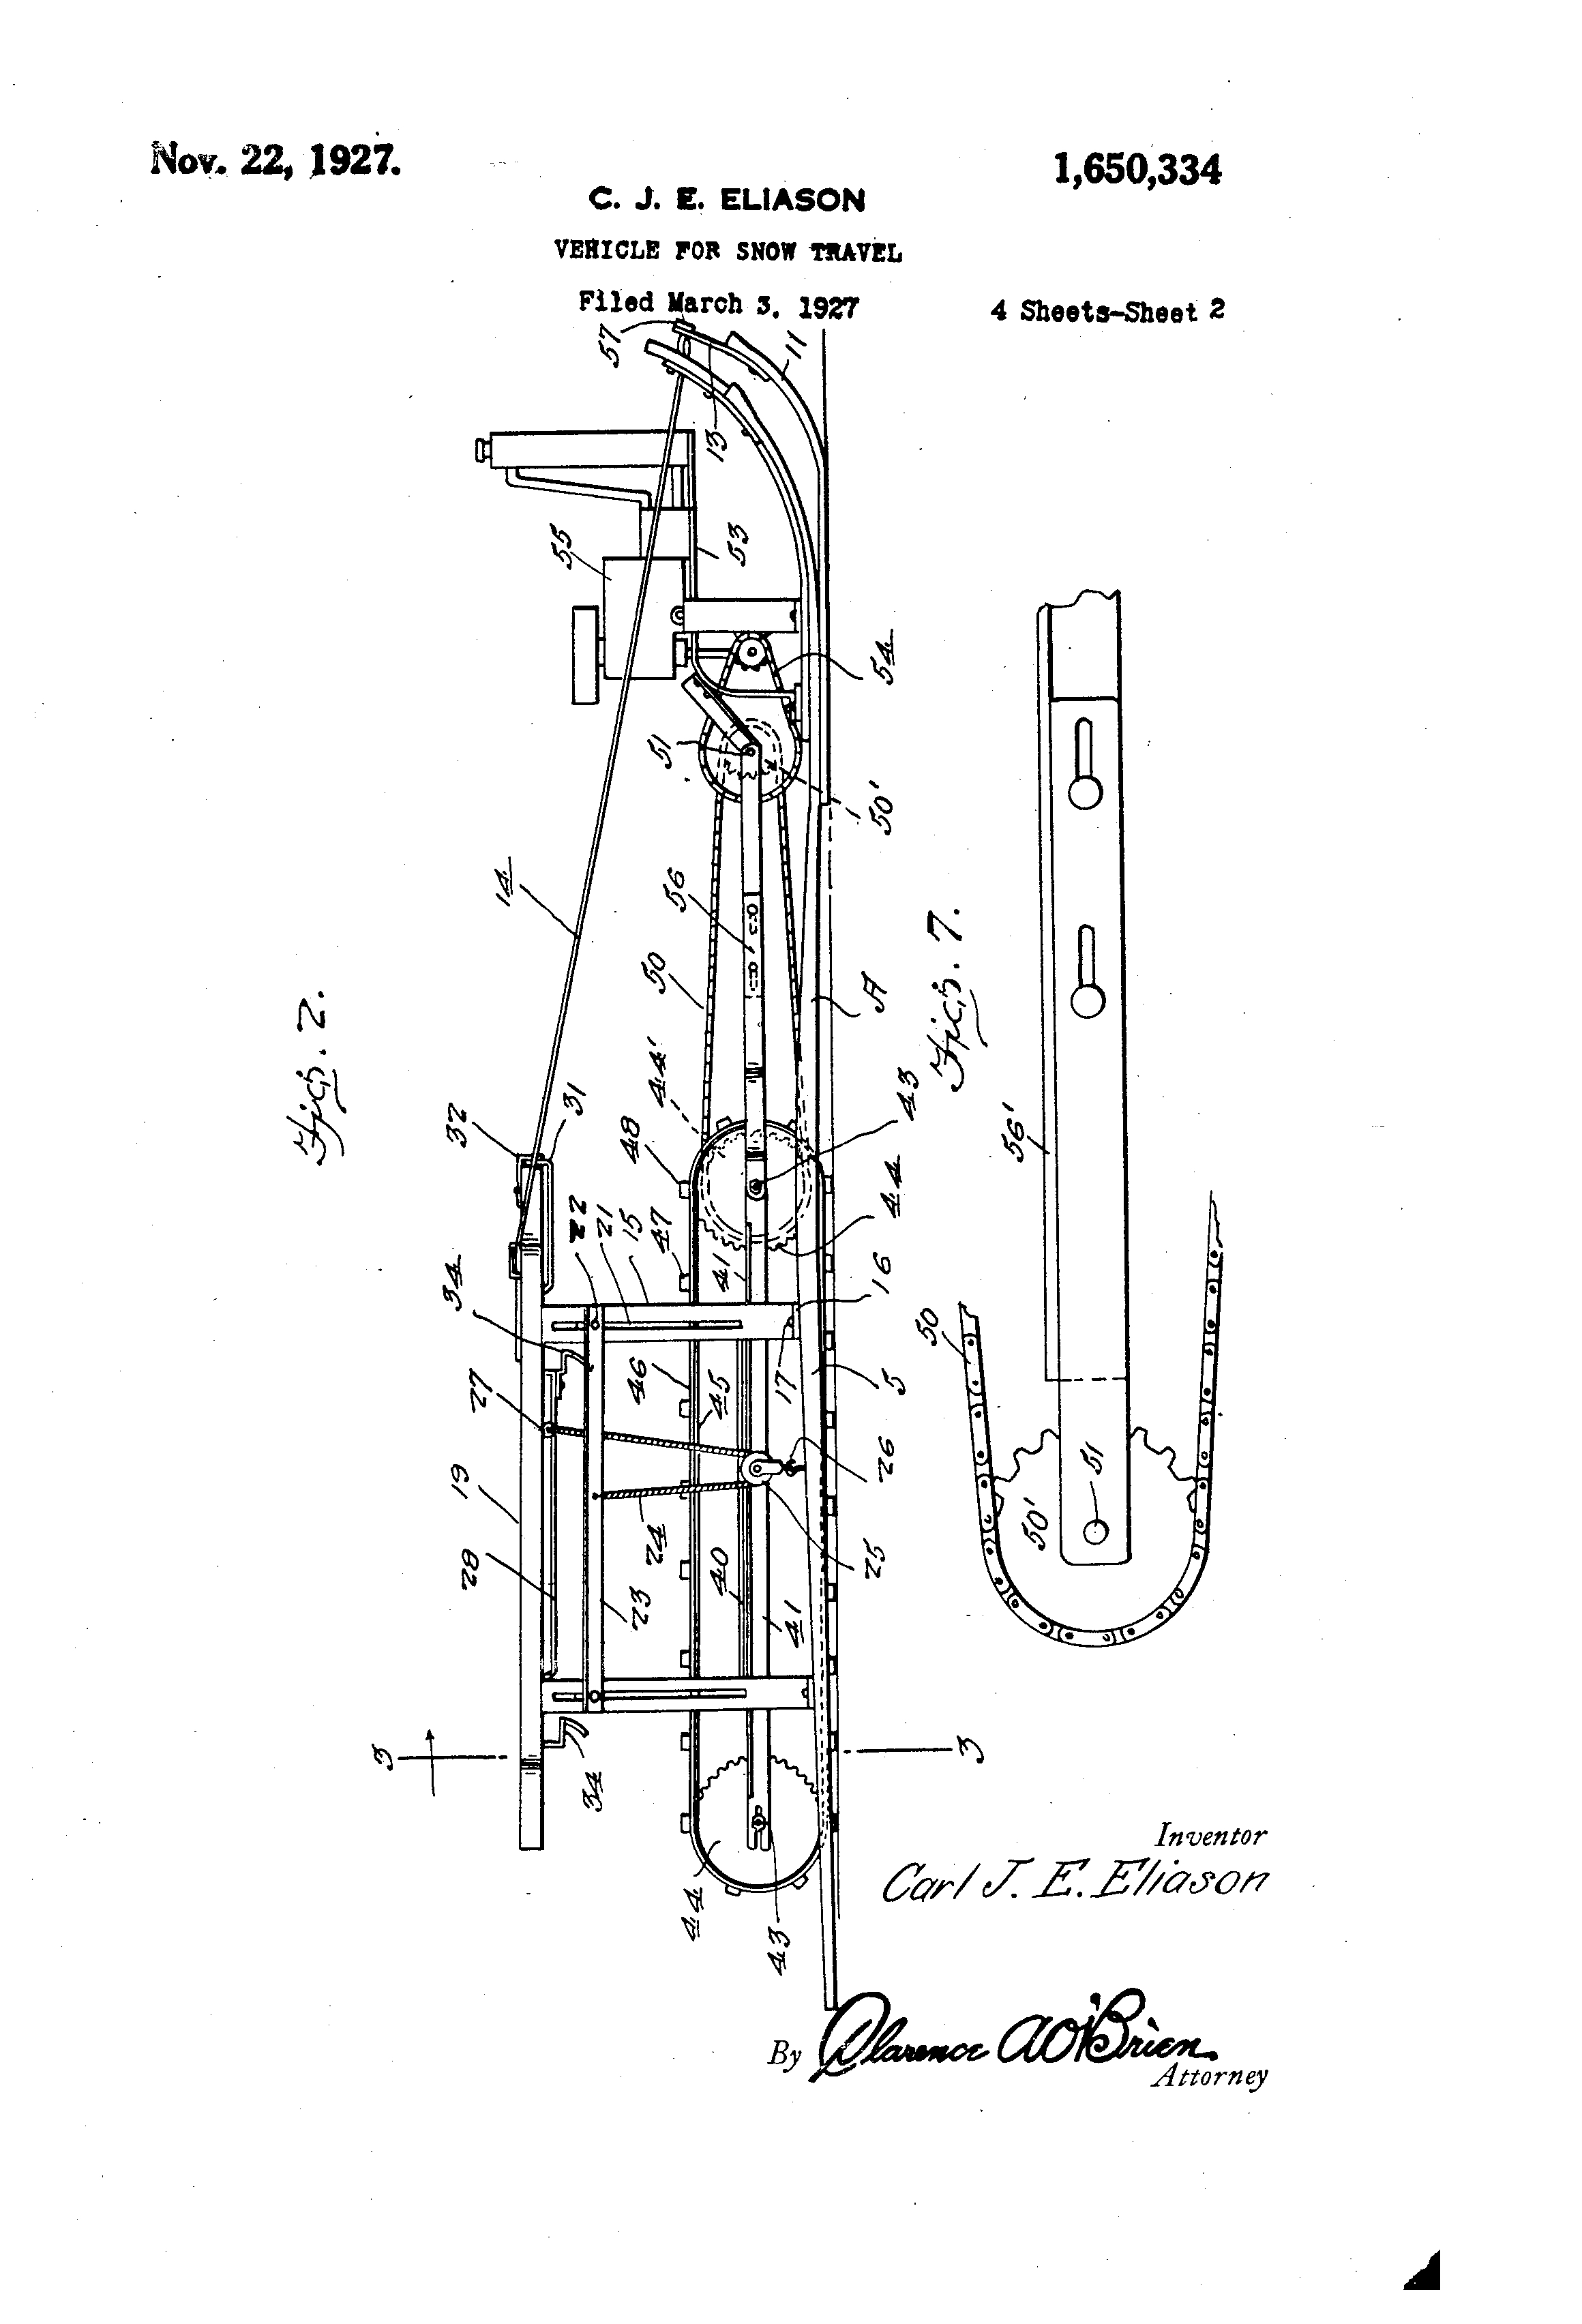 1927 snowmobile patent.